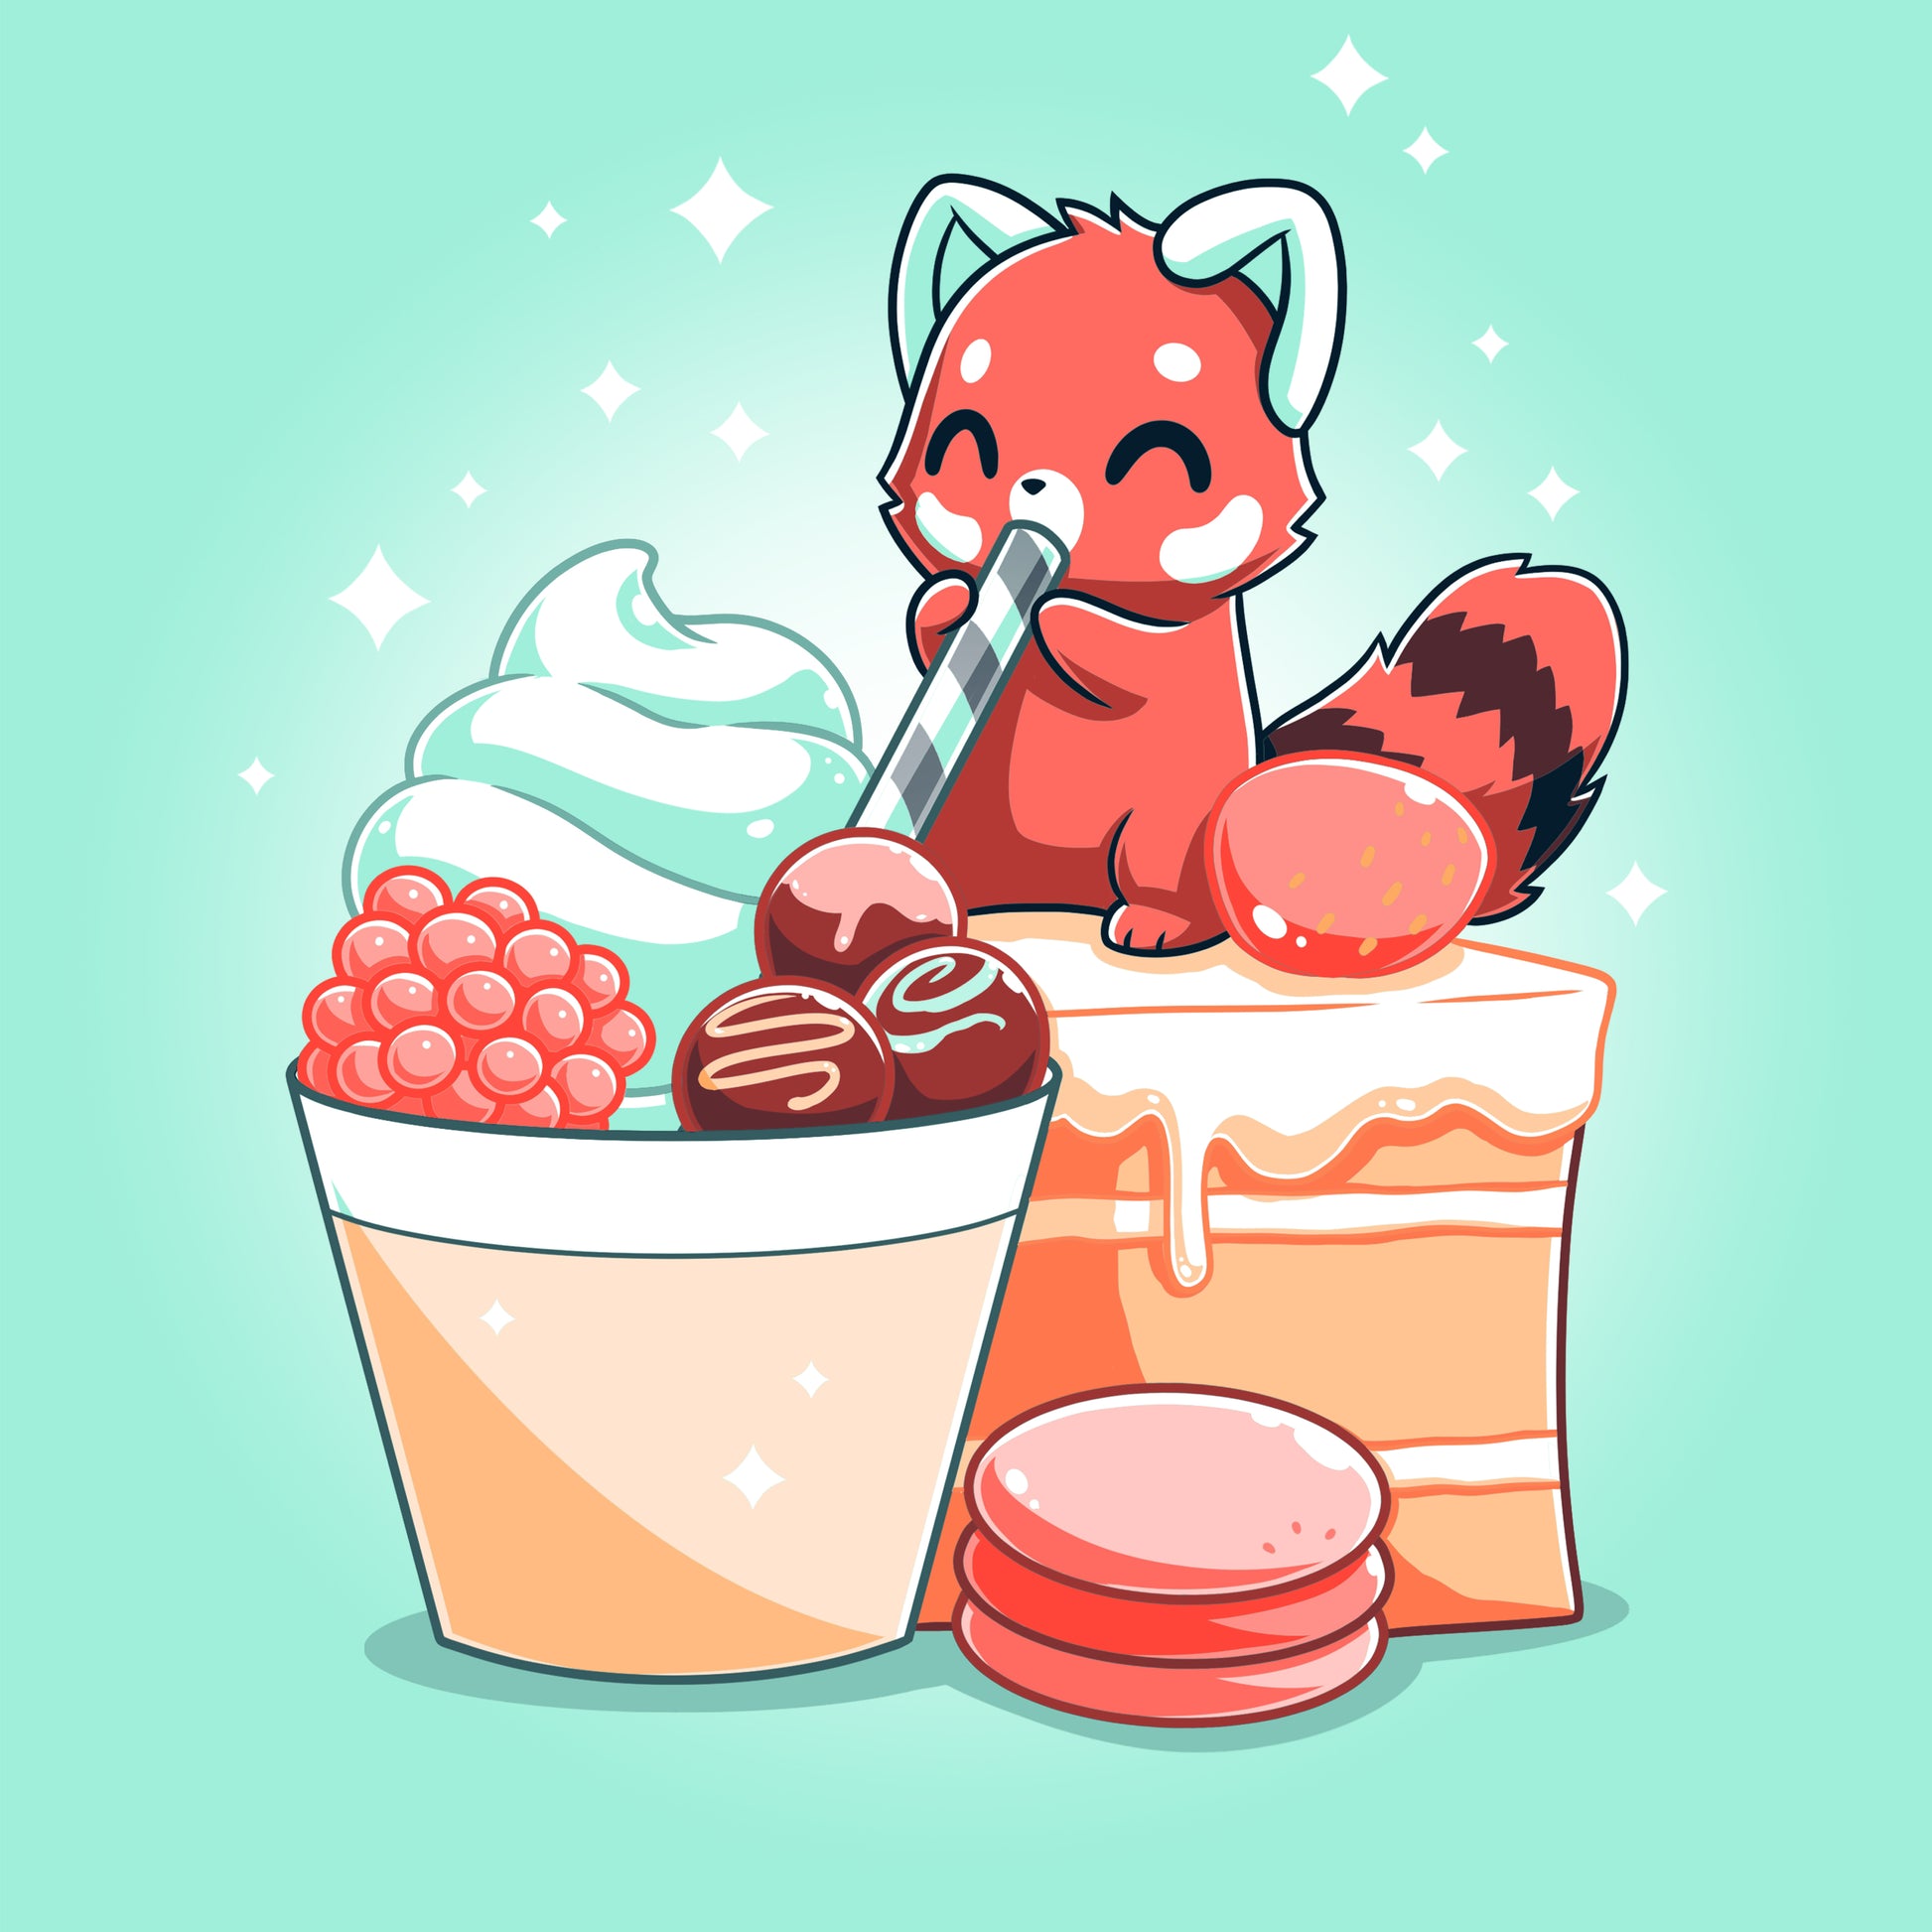 A cartoon fox sitting next to a cup of Dessert First ice cream on a TeeTurtle t-shirt.